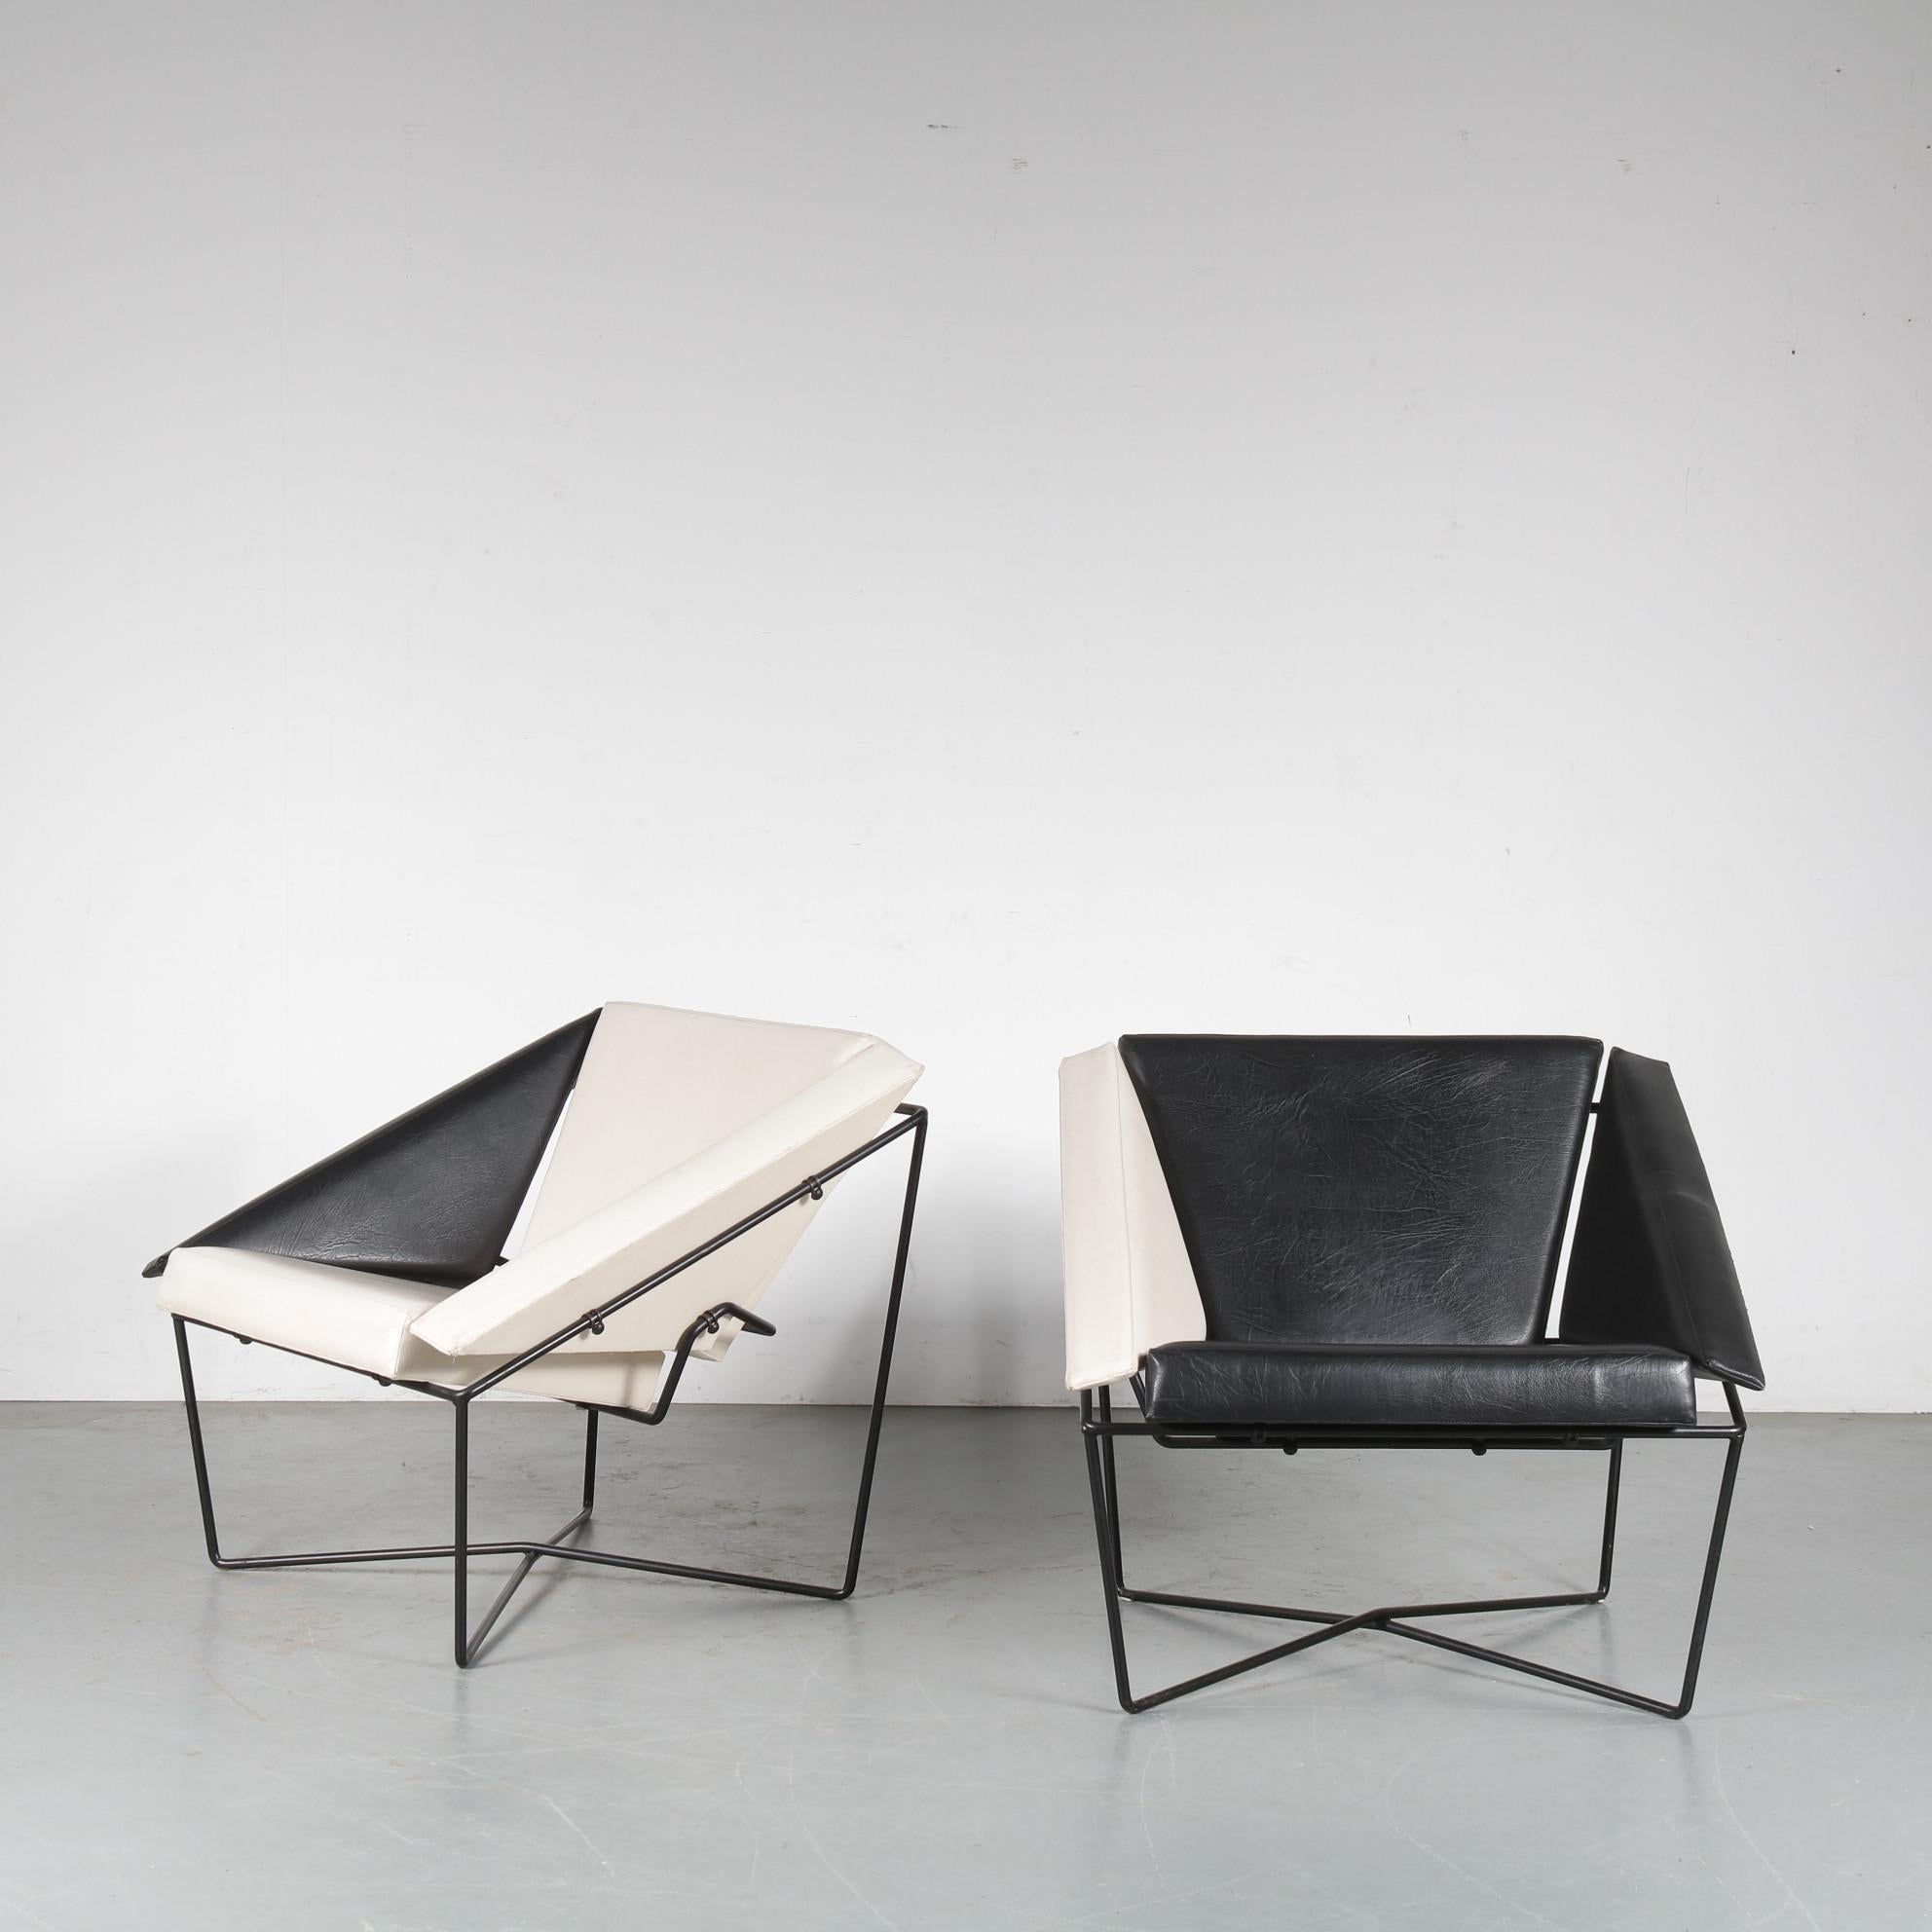 Rob Eckhardt Pair of “Van Speyk” Chairs for Pastoe, Netherlands, 1984 1